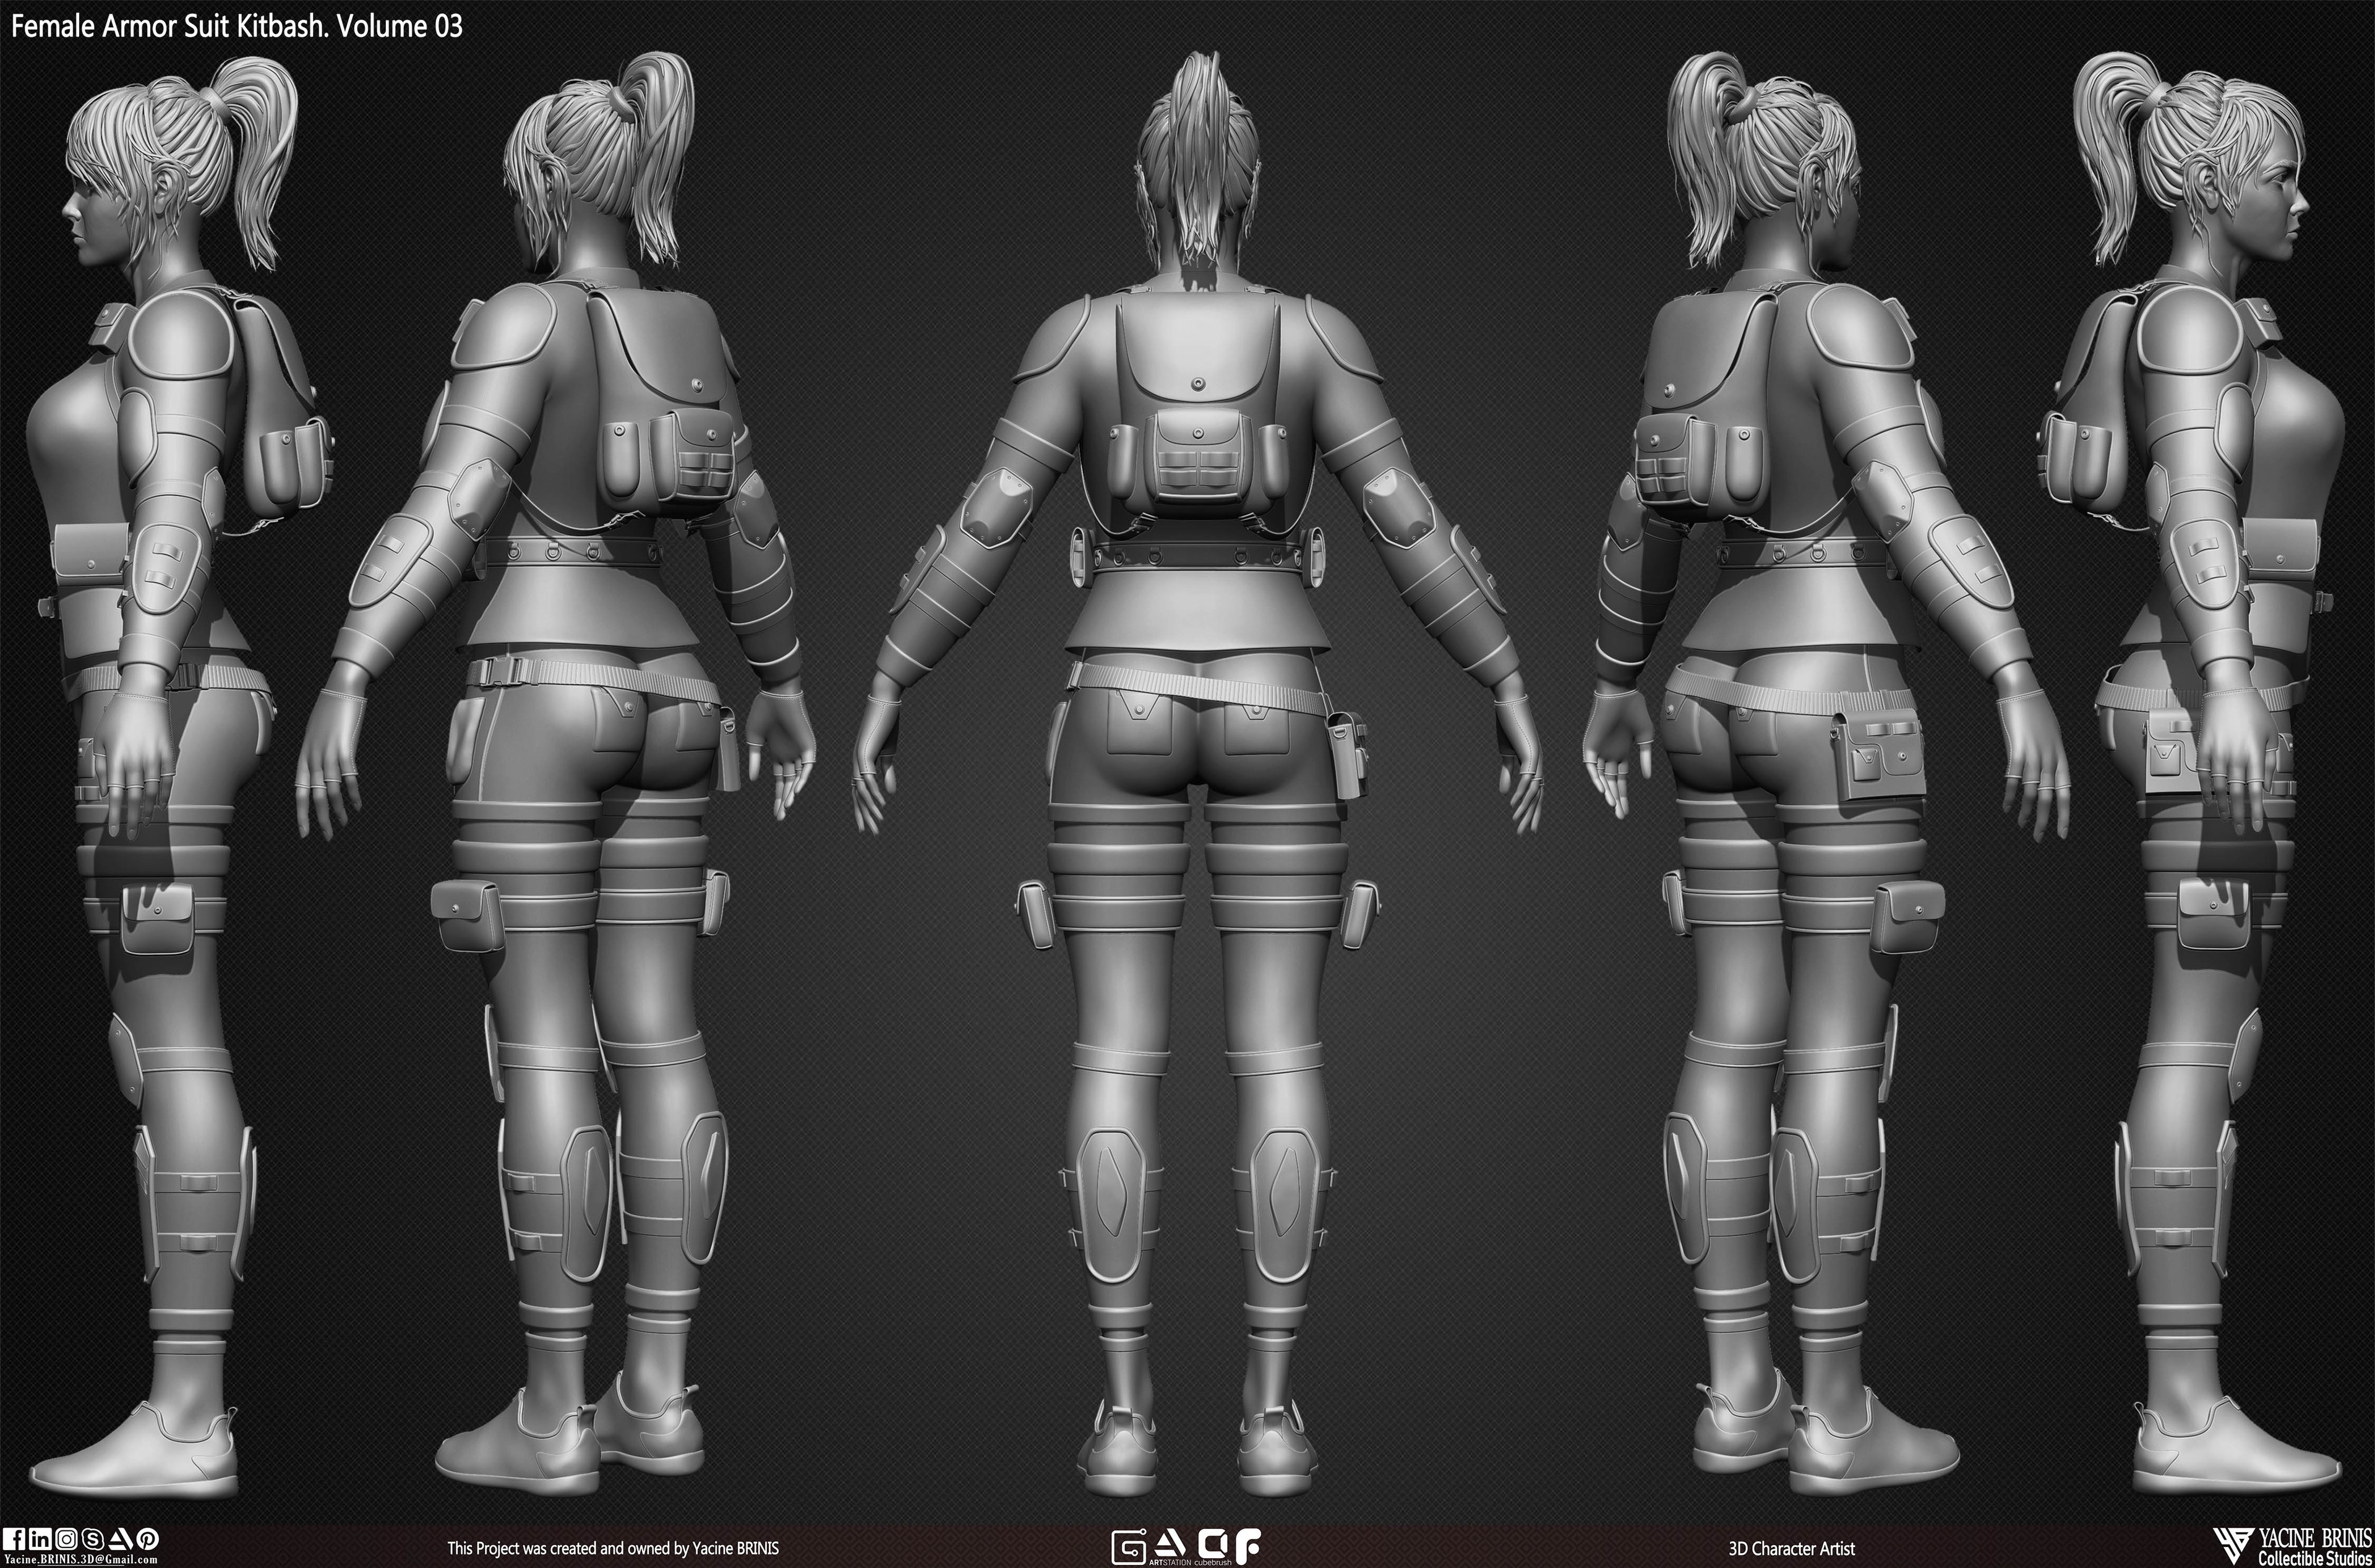 Female Armor Suit Kitbash sculpted By Yacine BRINIS Vol 03 Set 003